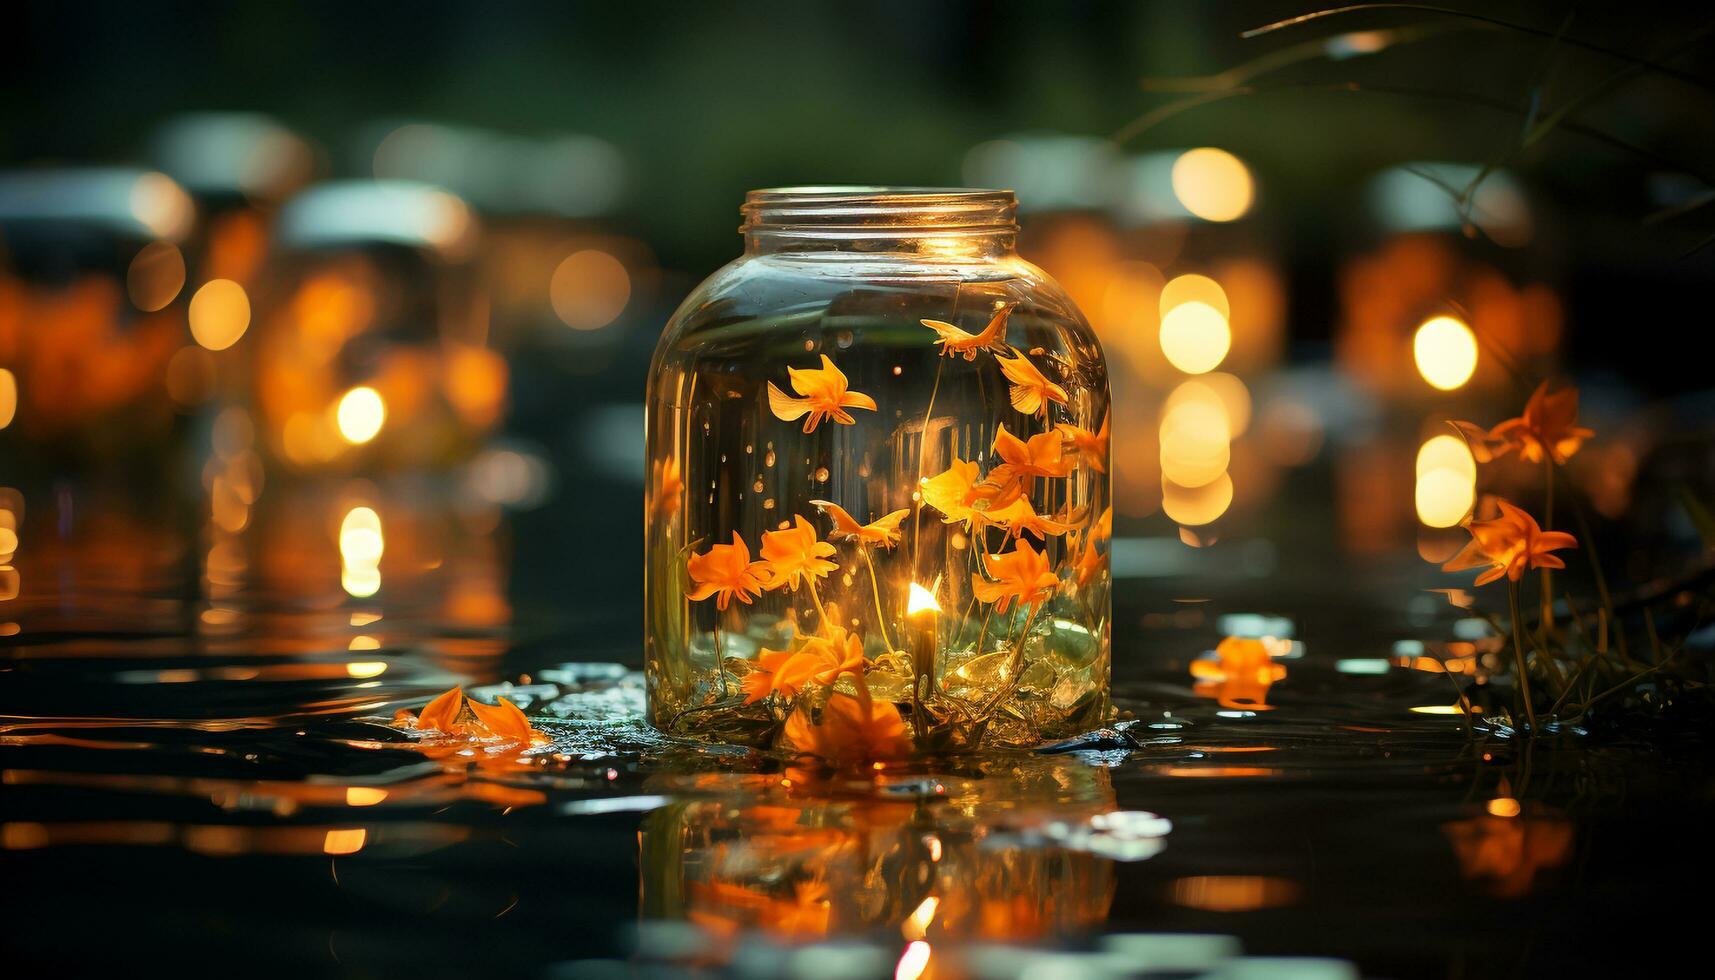 Glowing candle illuminates dark night, reflecting on water surface generated by AI photo